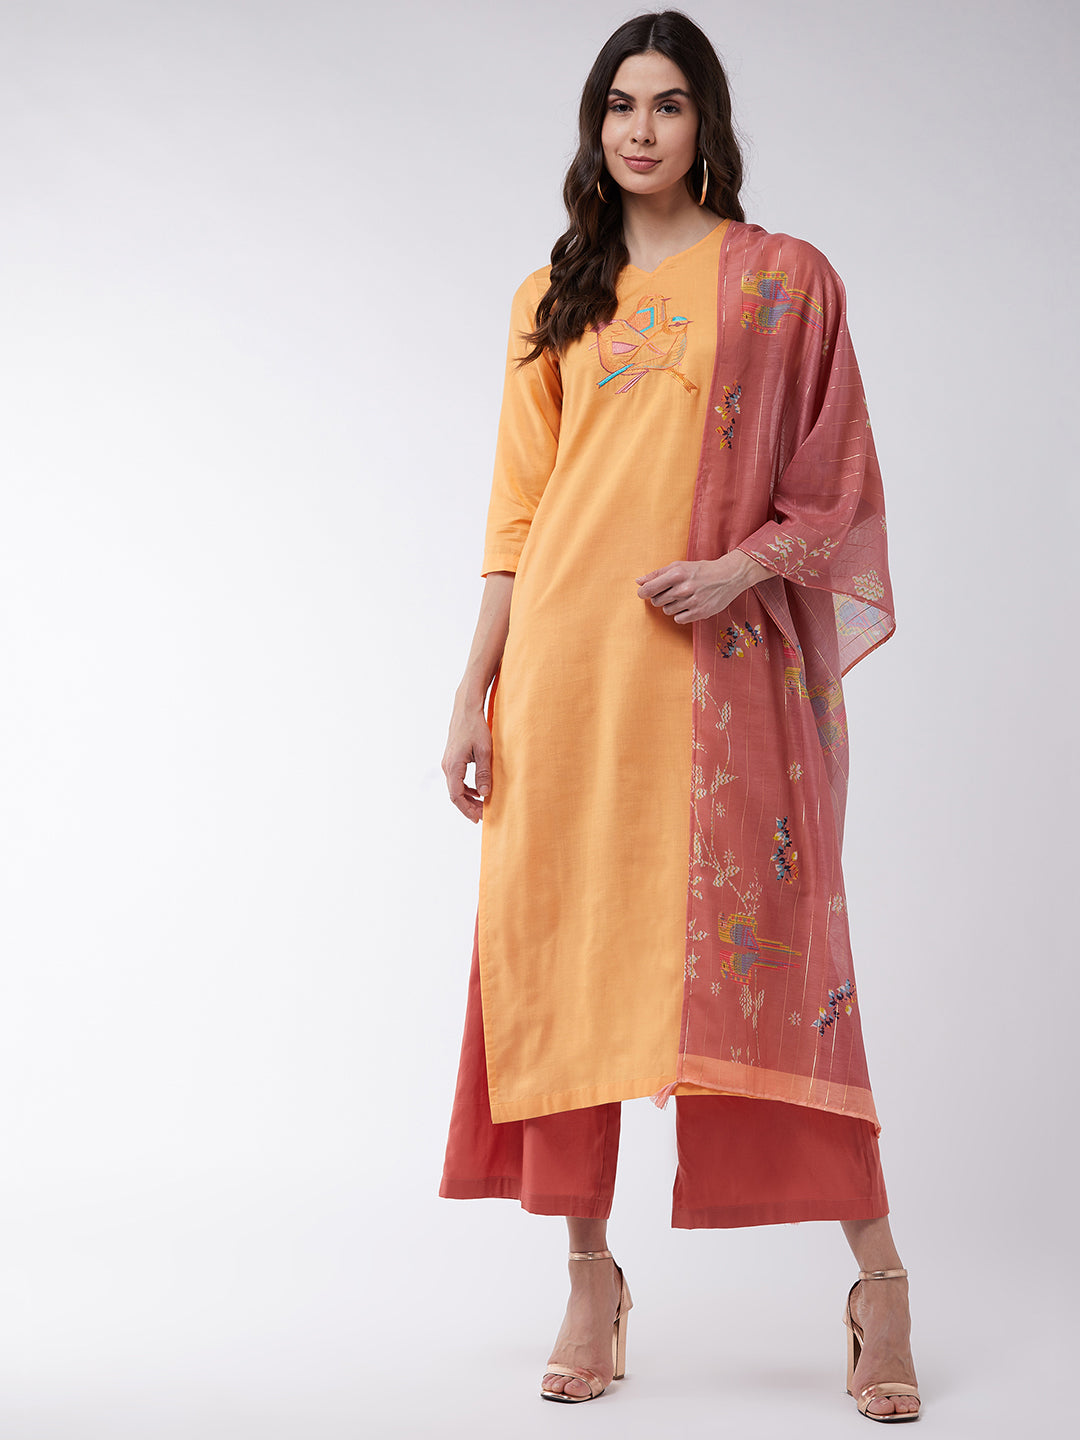 Buy Women Light Orange Cotton Straight Kurti with Pant (Medium) at Amazon.in